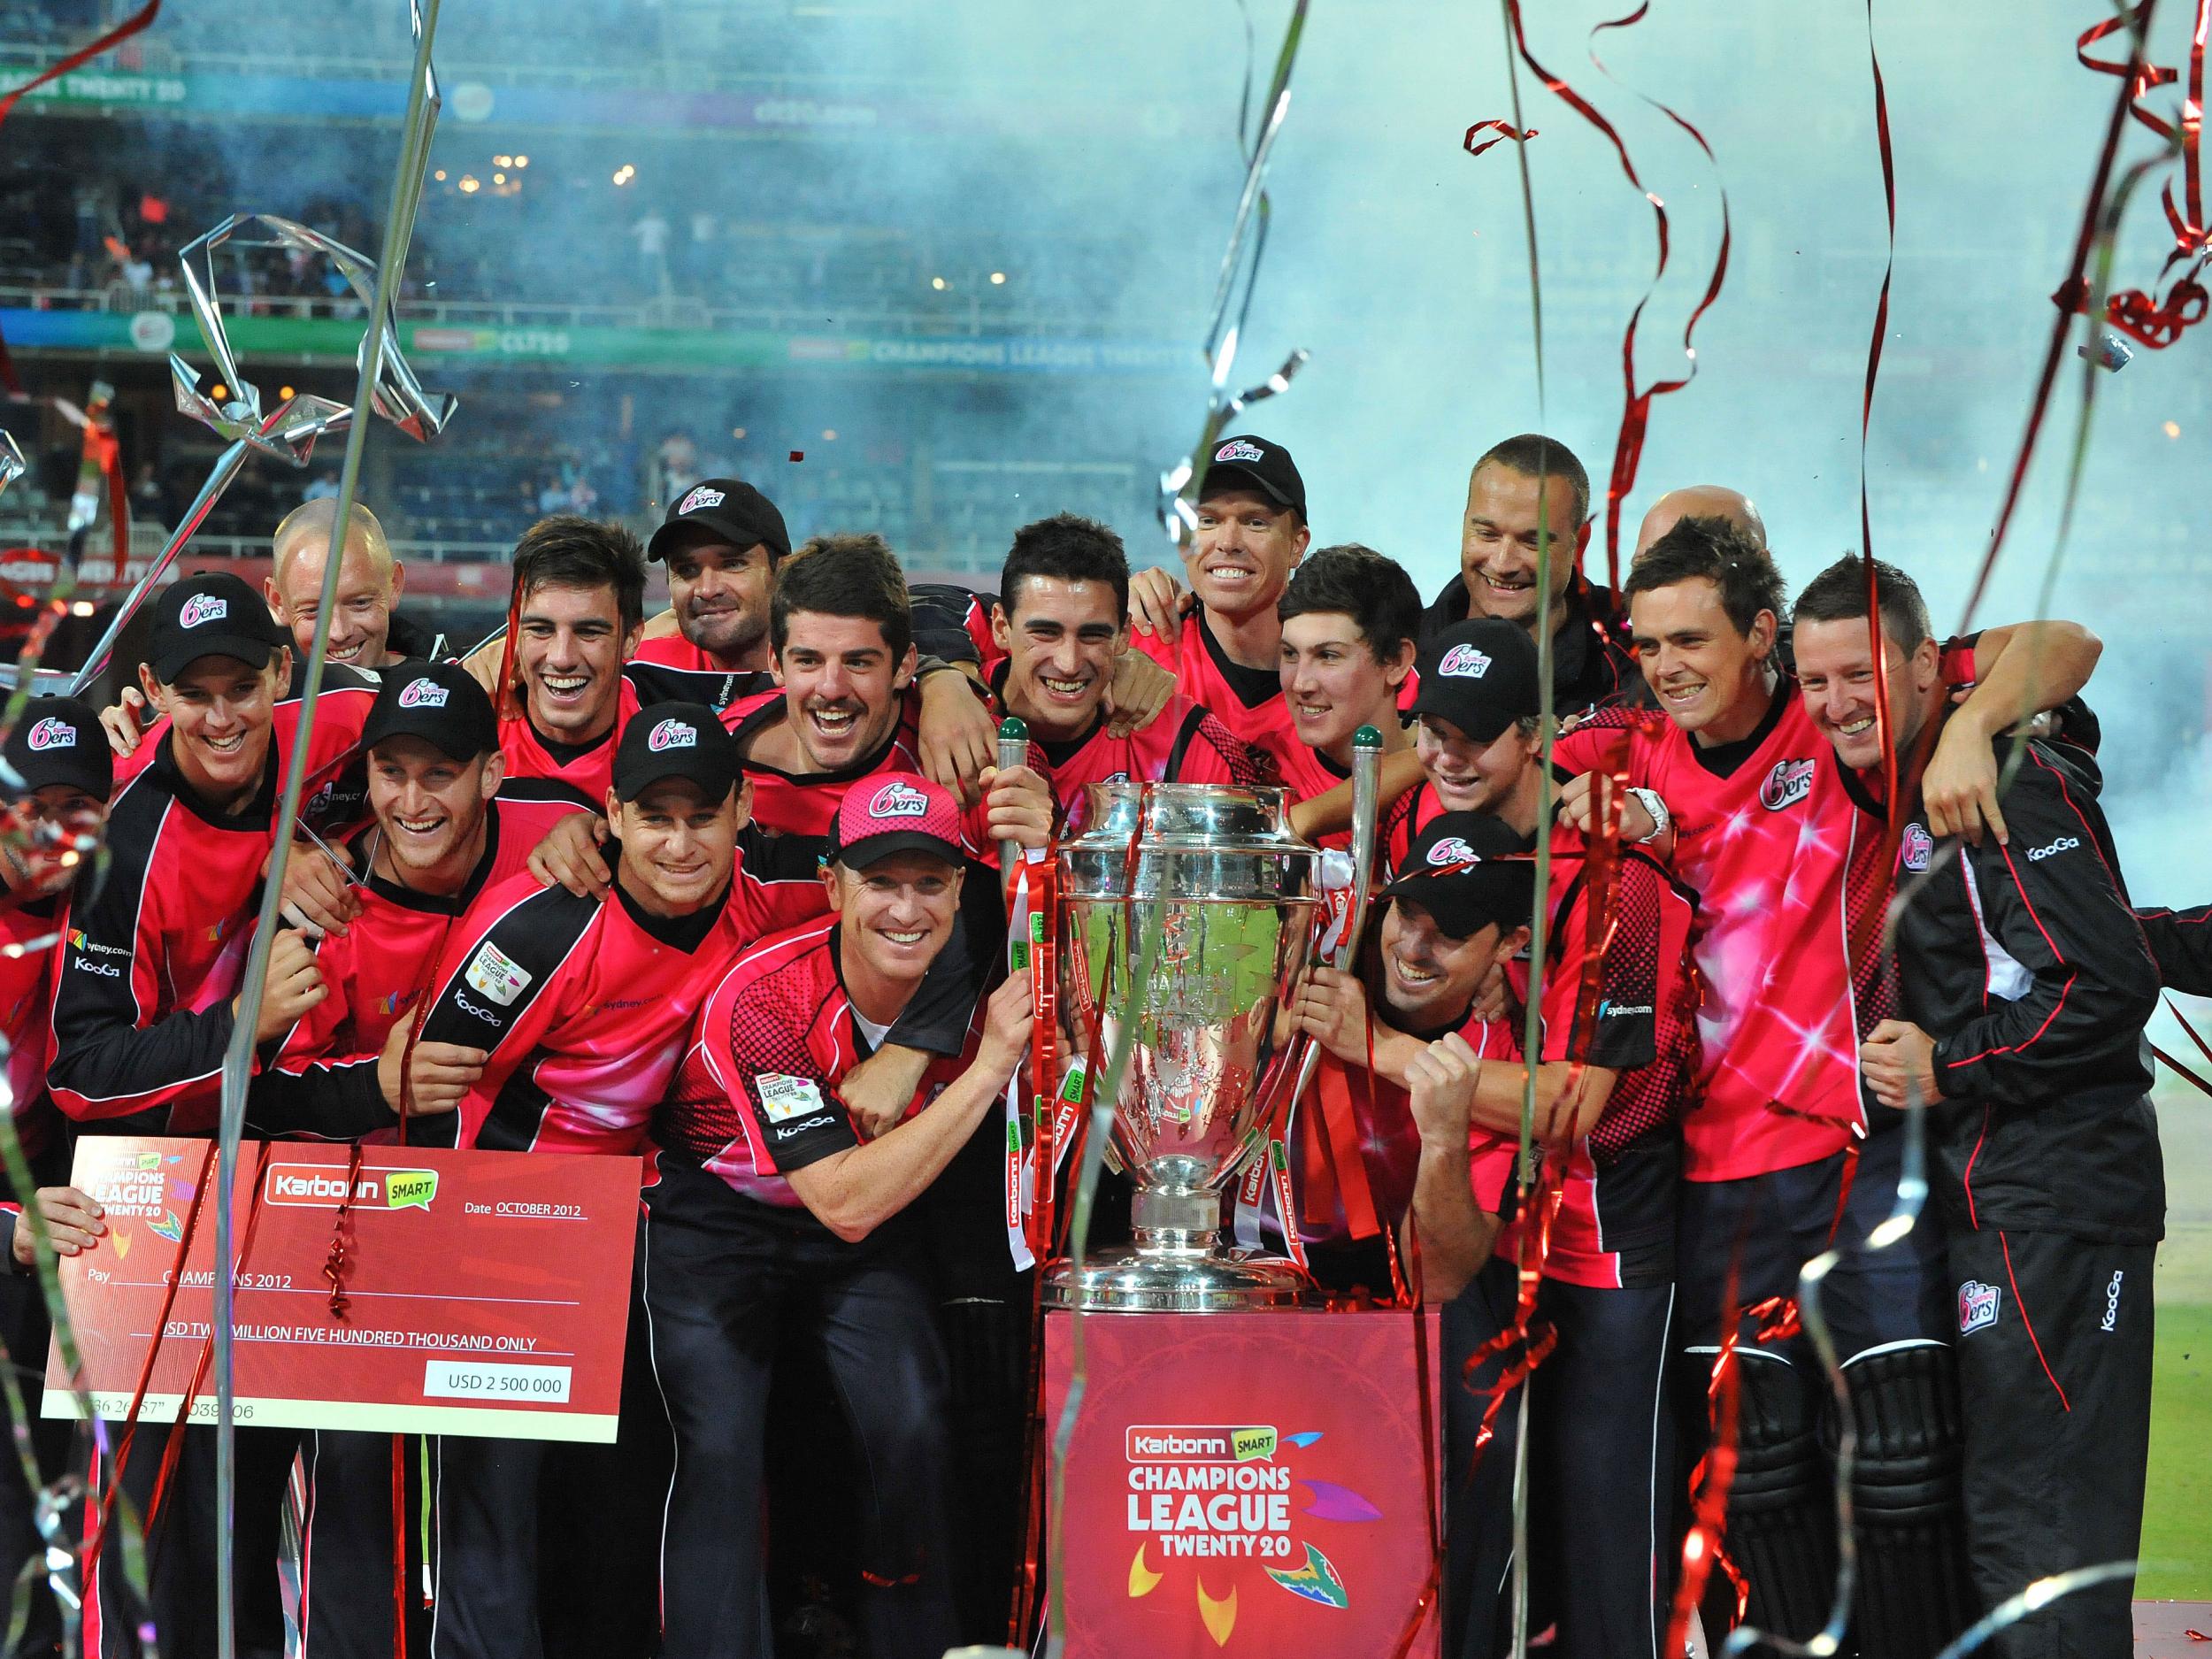 The Sydney Sixers celebrate their 2012 CLT20 triumph